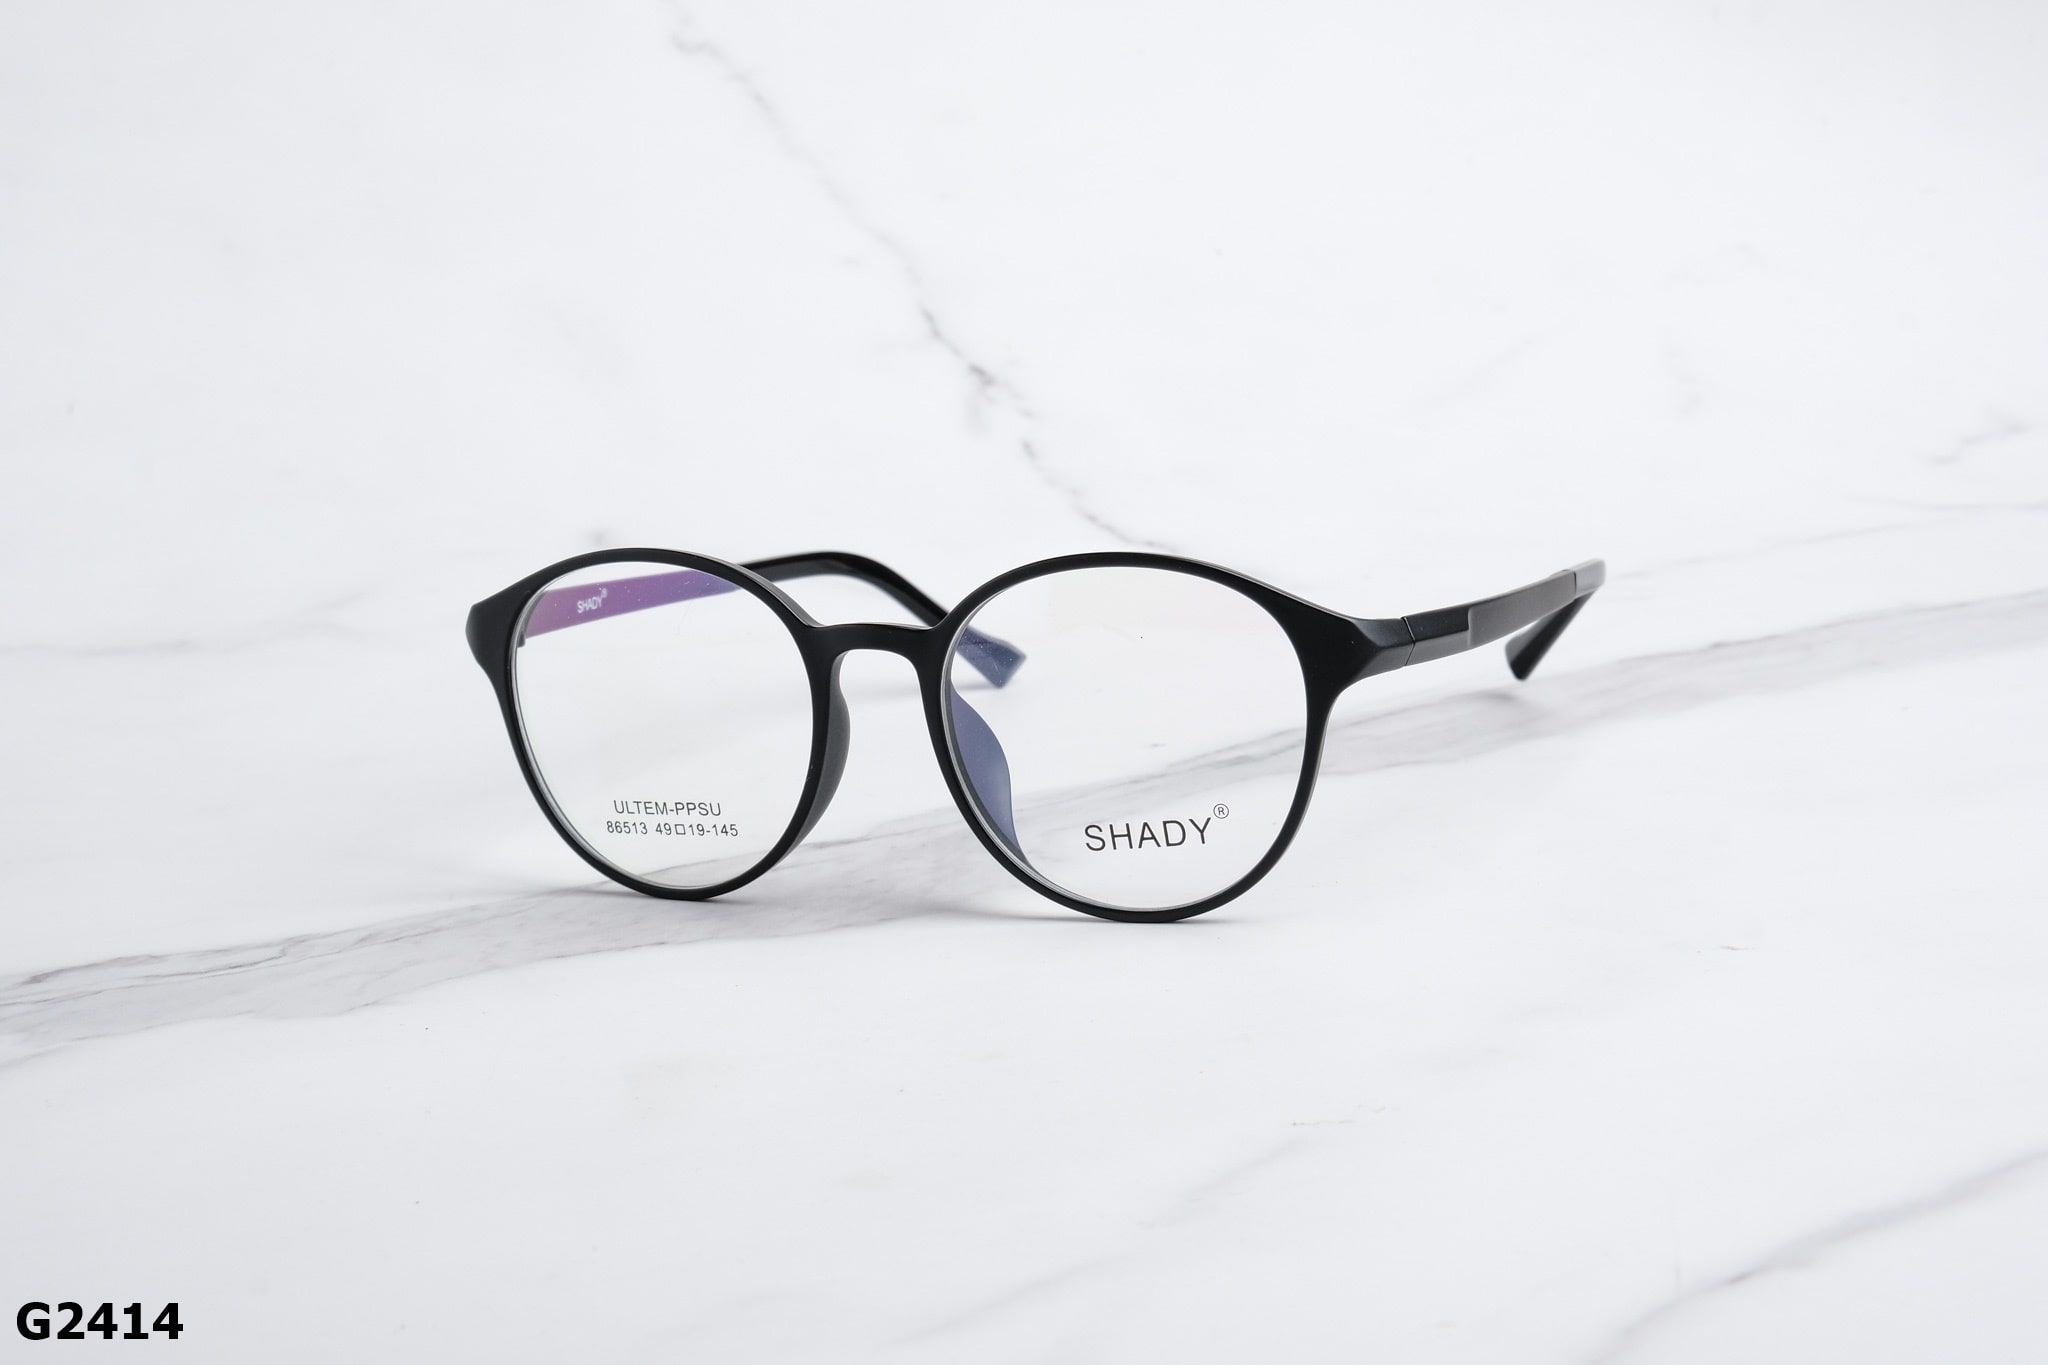  SHADY Eyewear - Glasses - G2414 